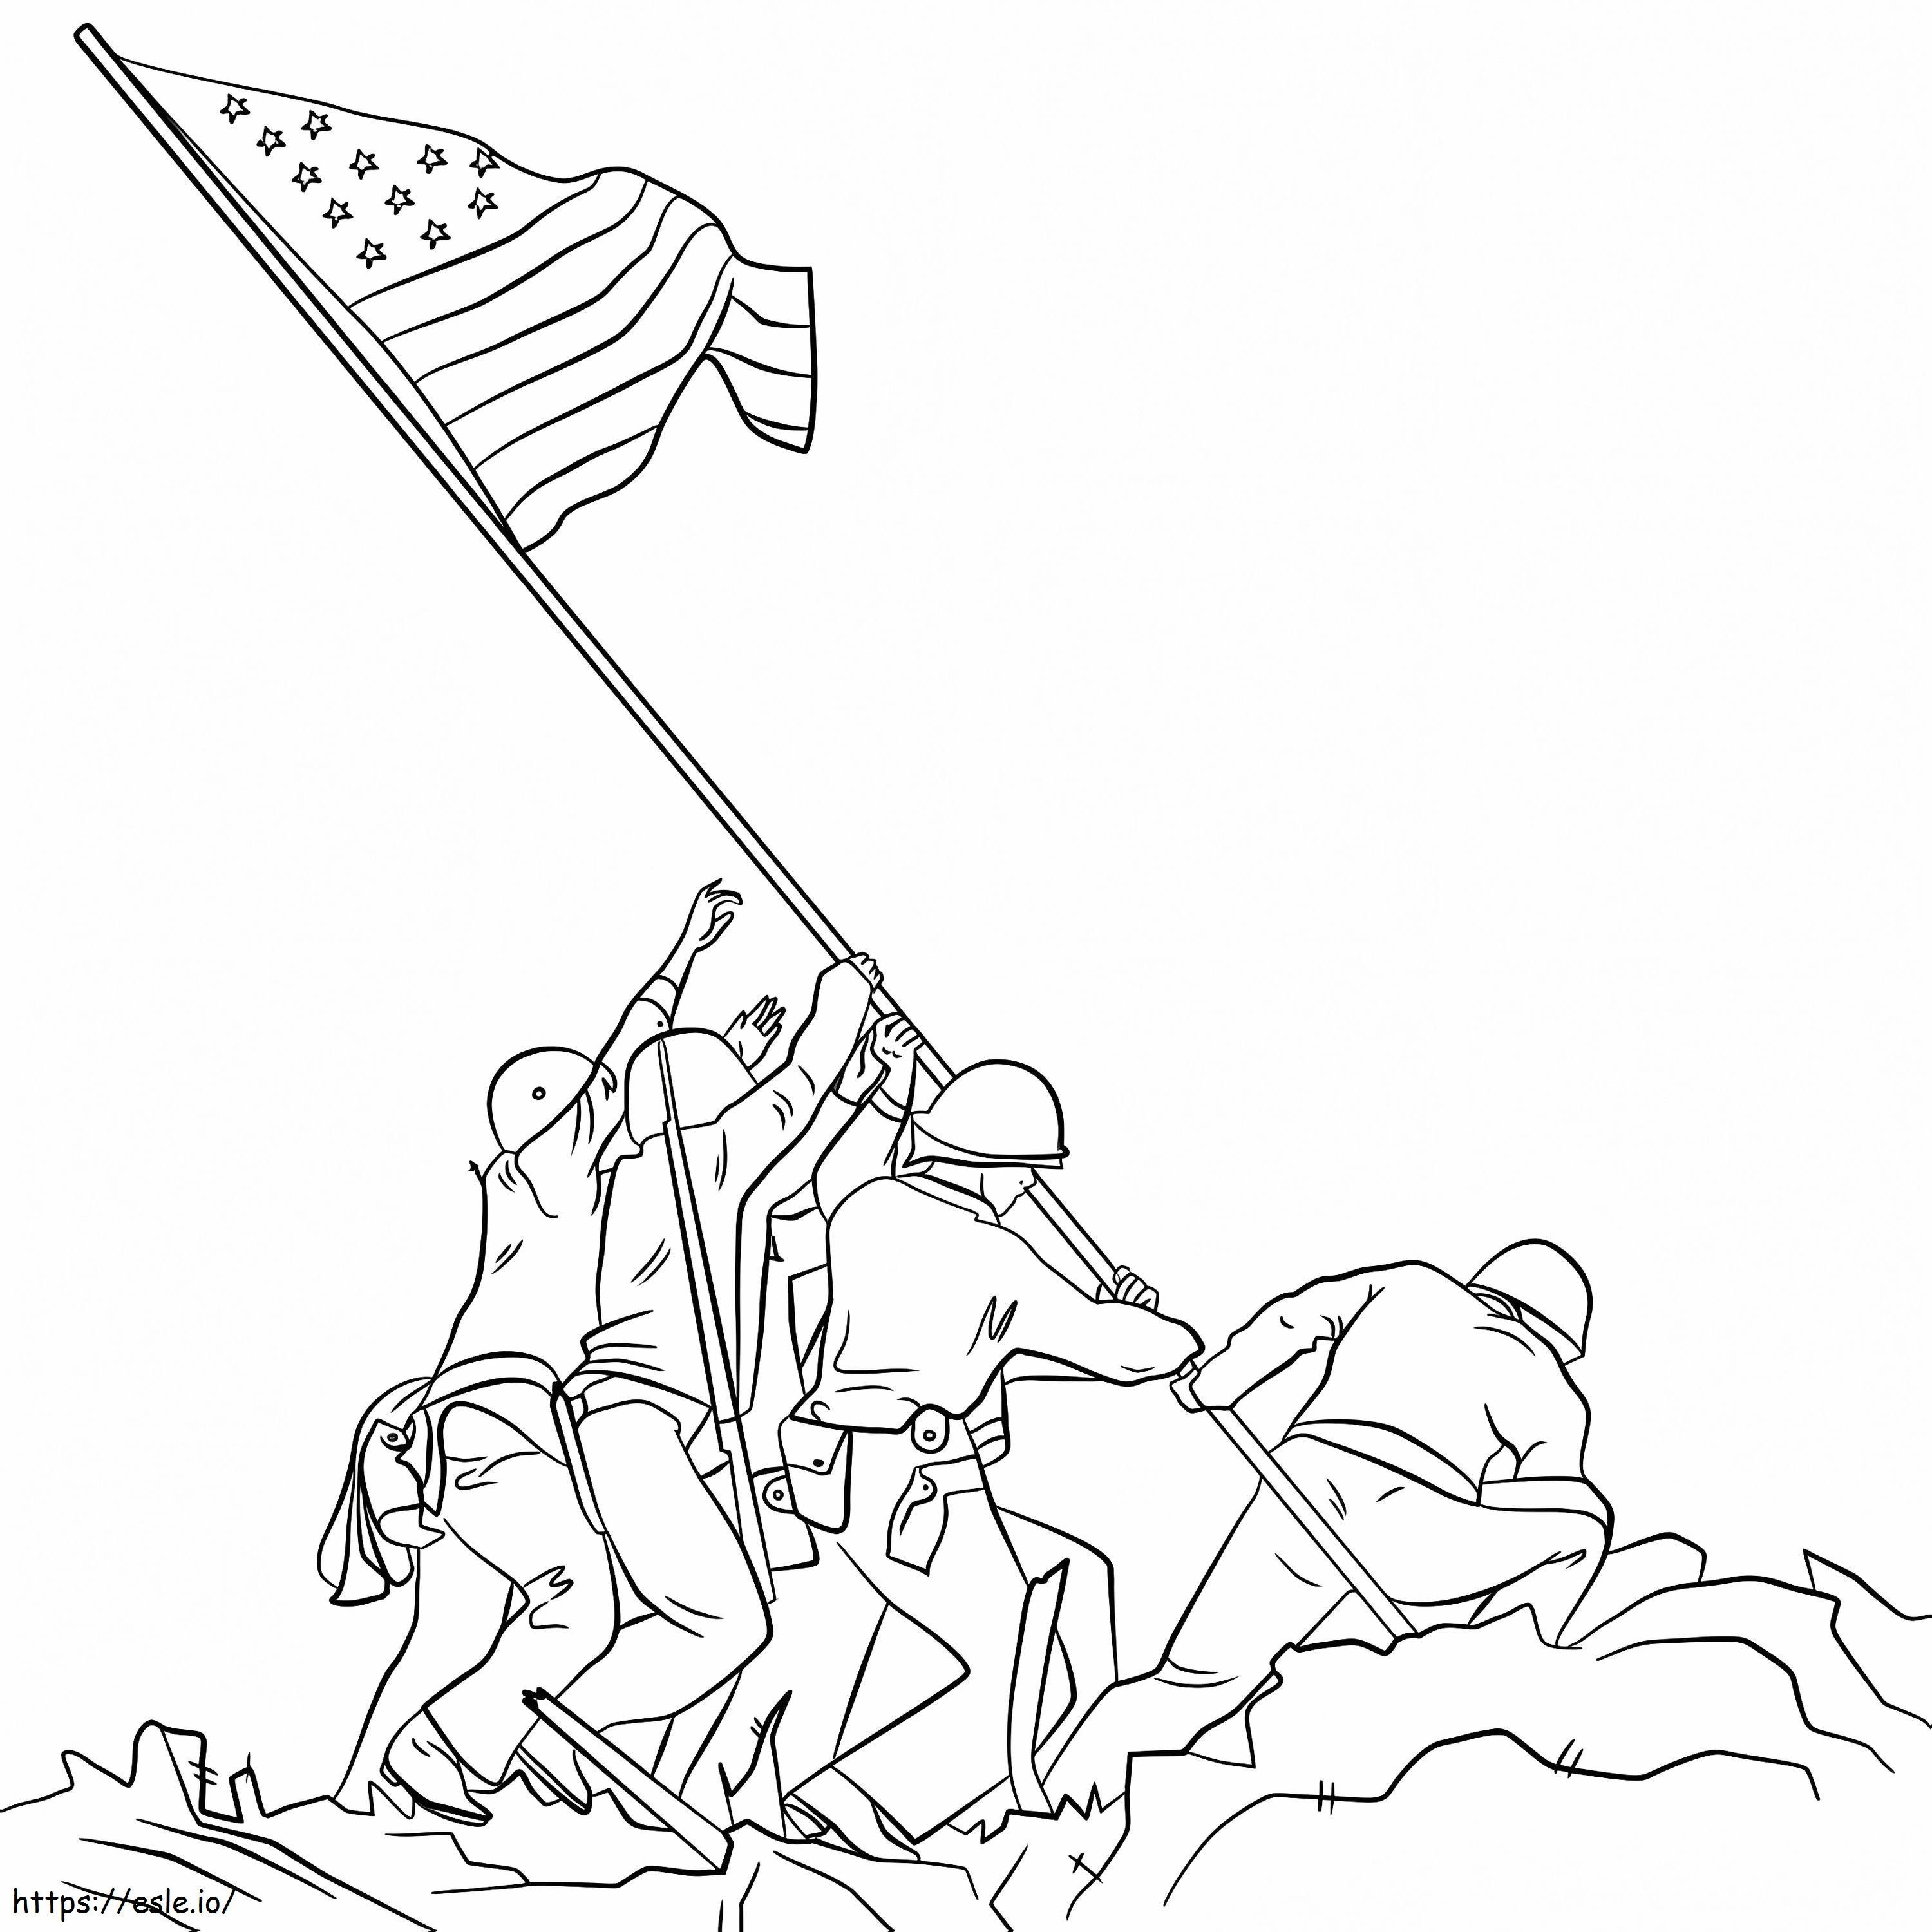 Raising The Flag On Iwo Jima coloring page